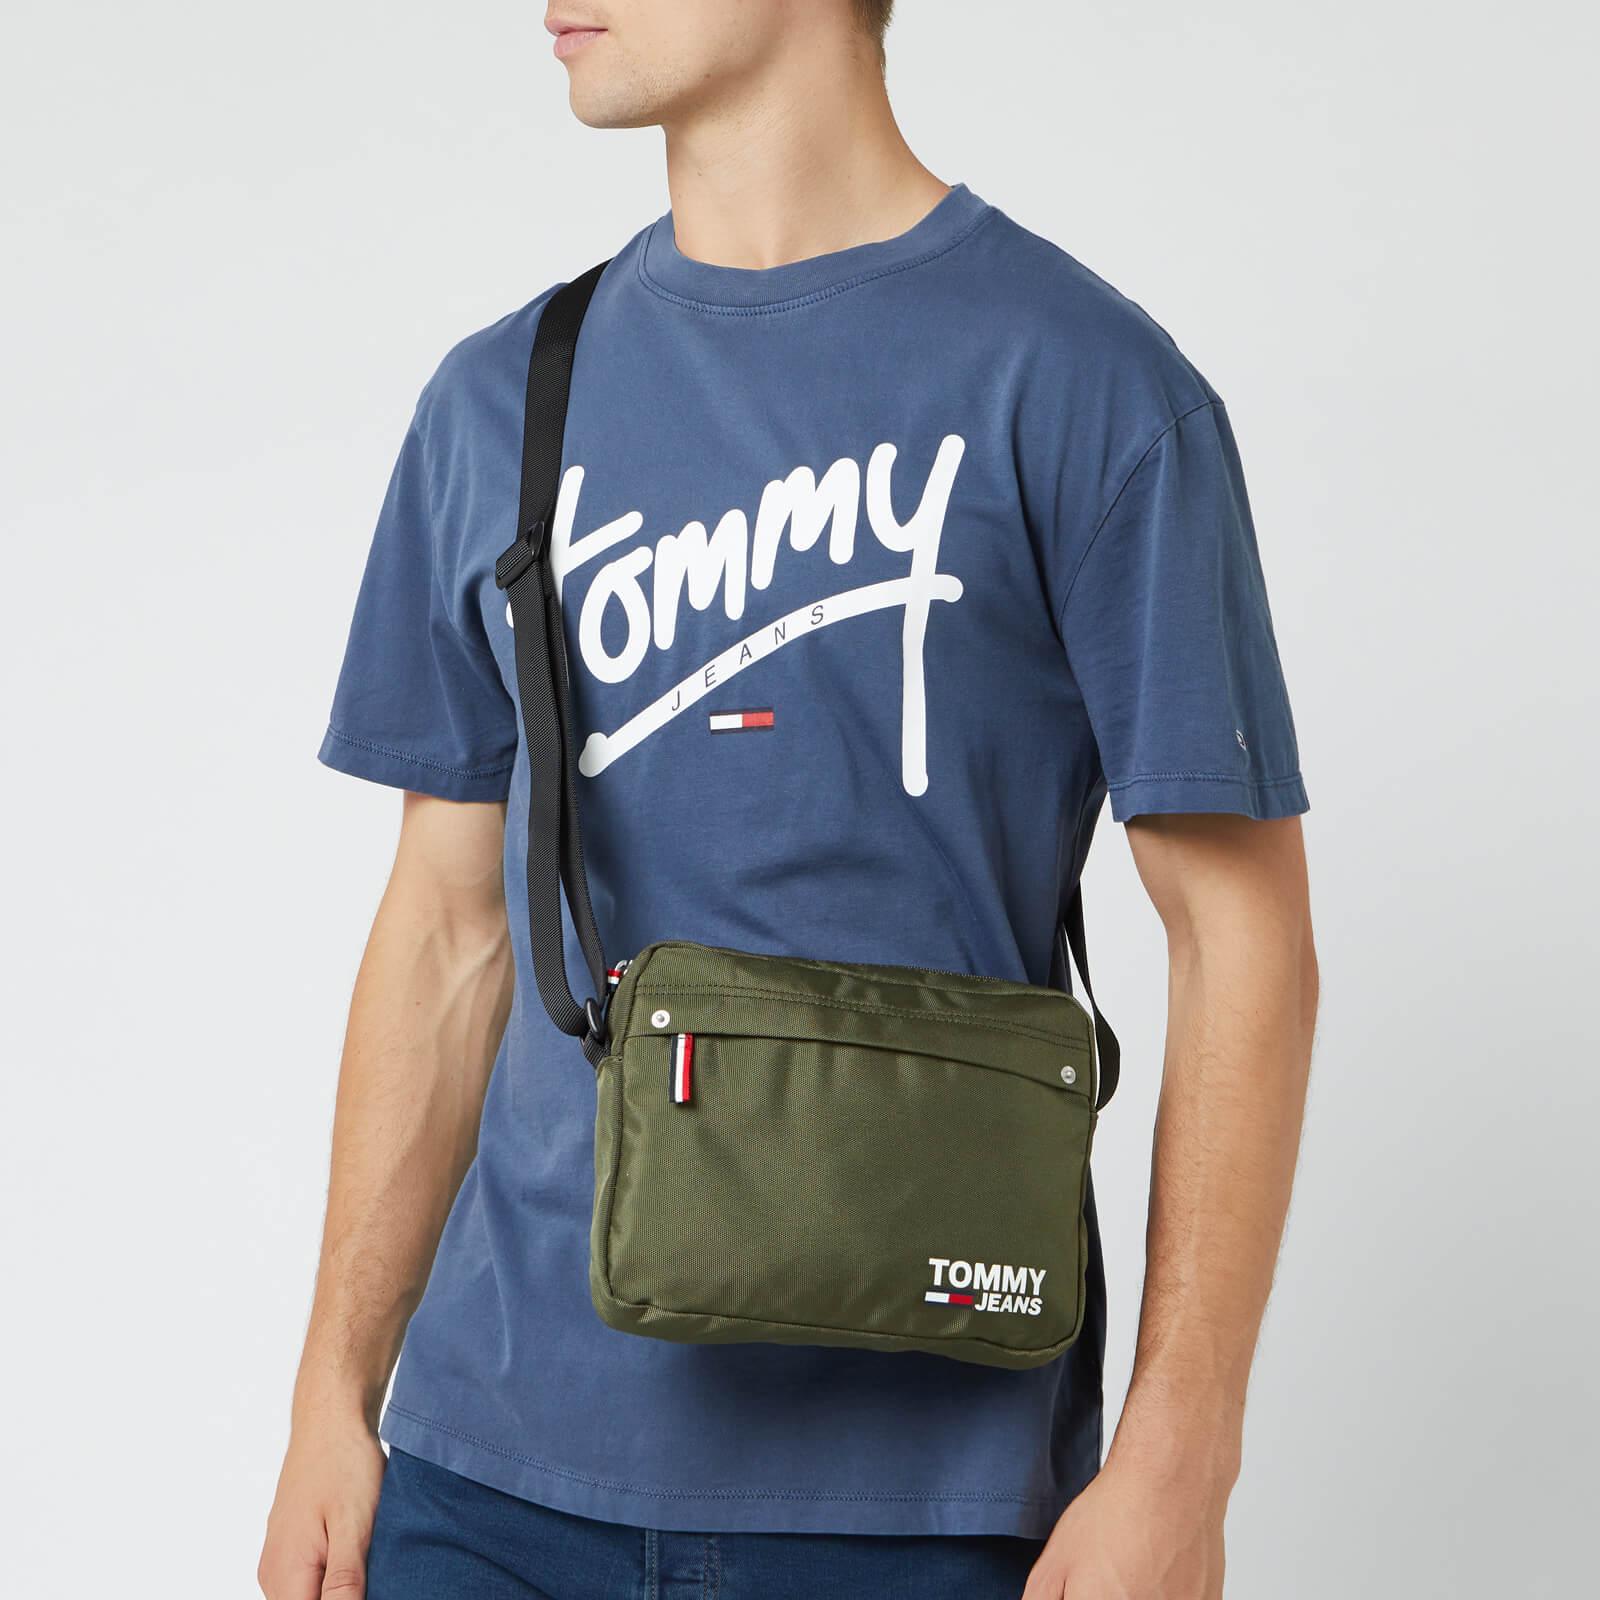 Tommy Jeans Cool City Crossbody Bag Flash Sales, SAVE 37% - mpgc.net